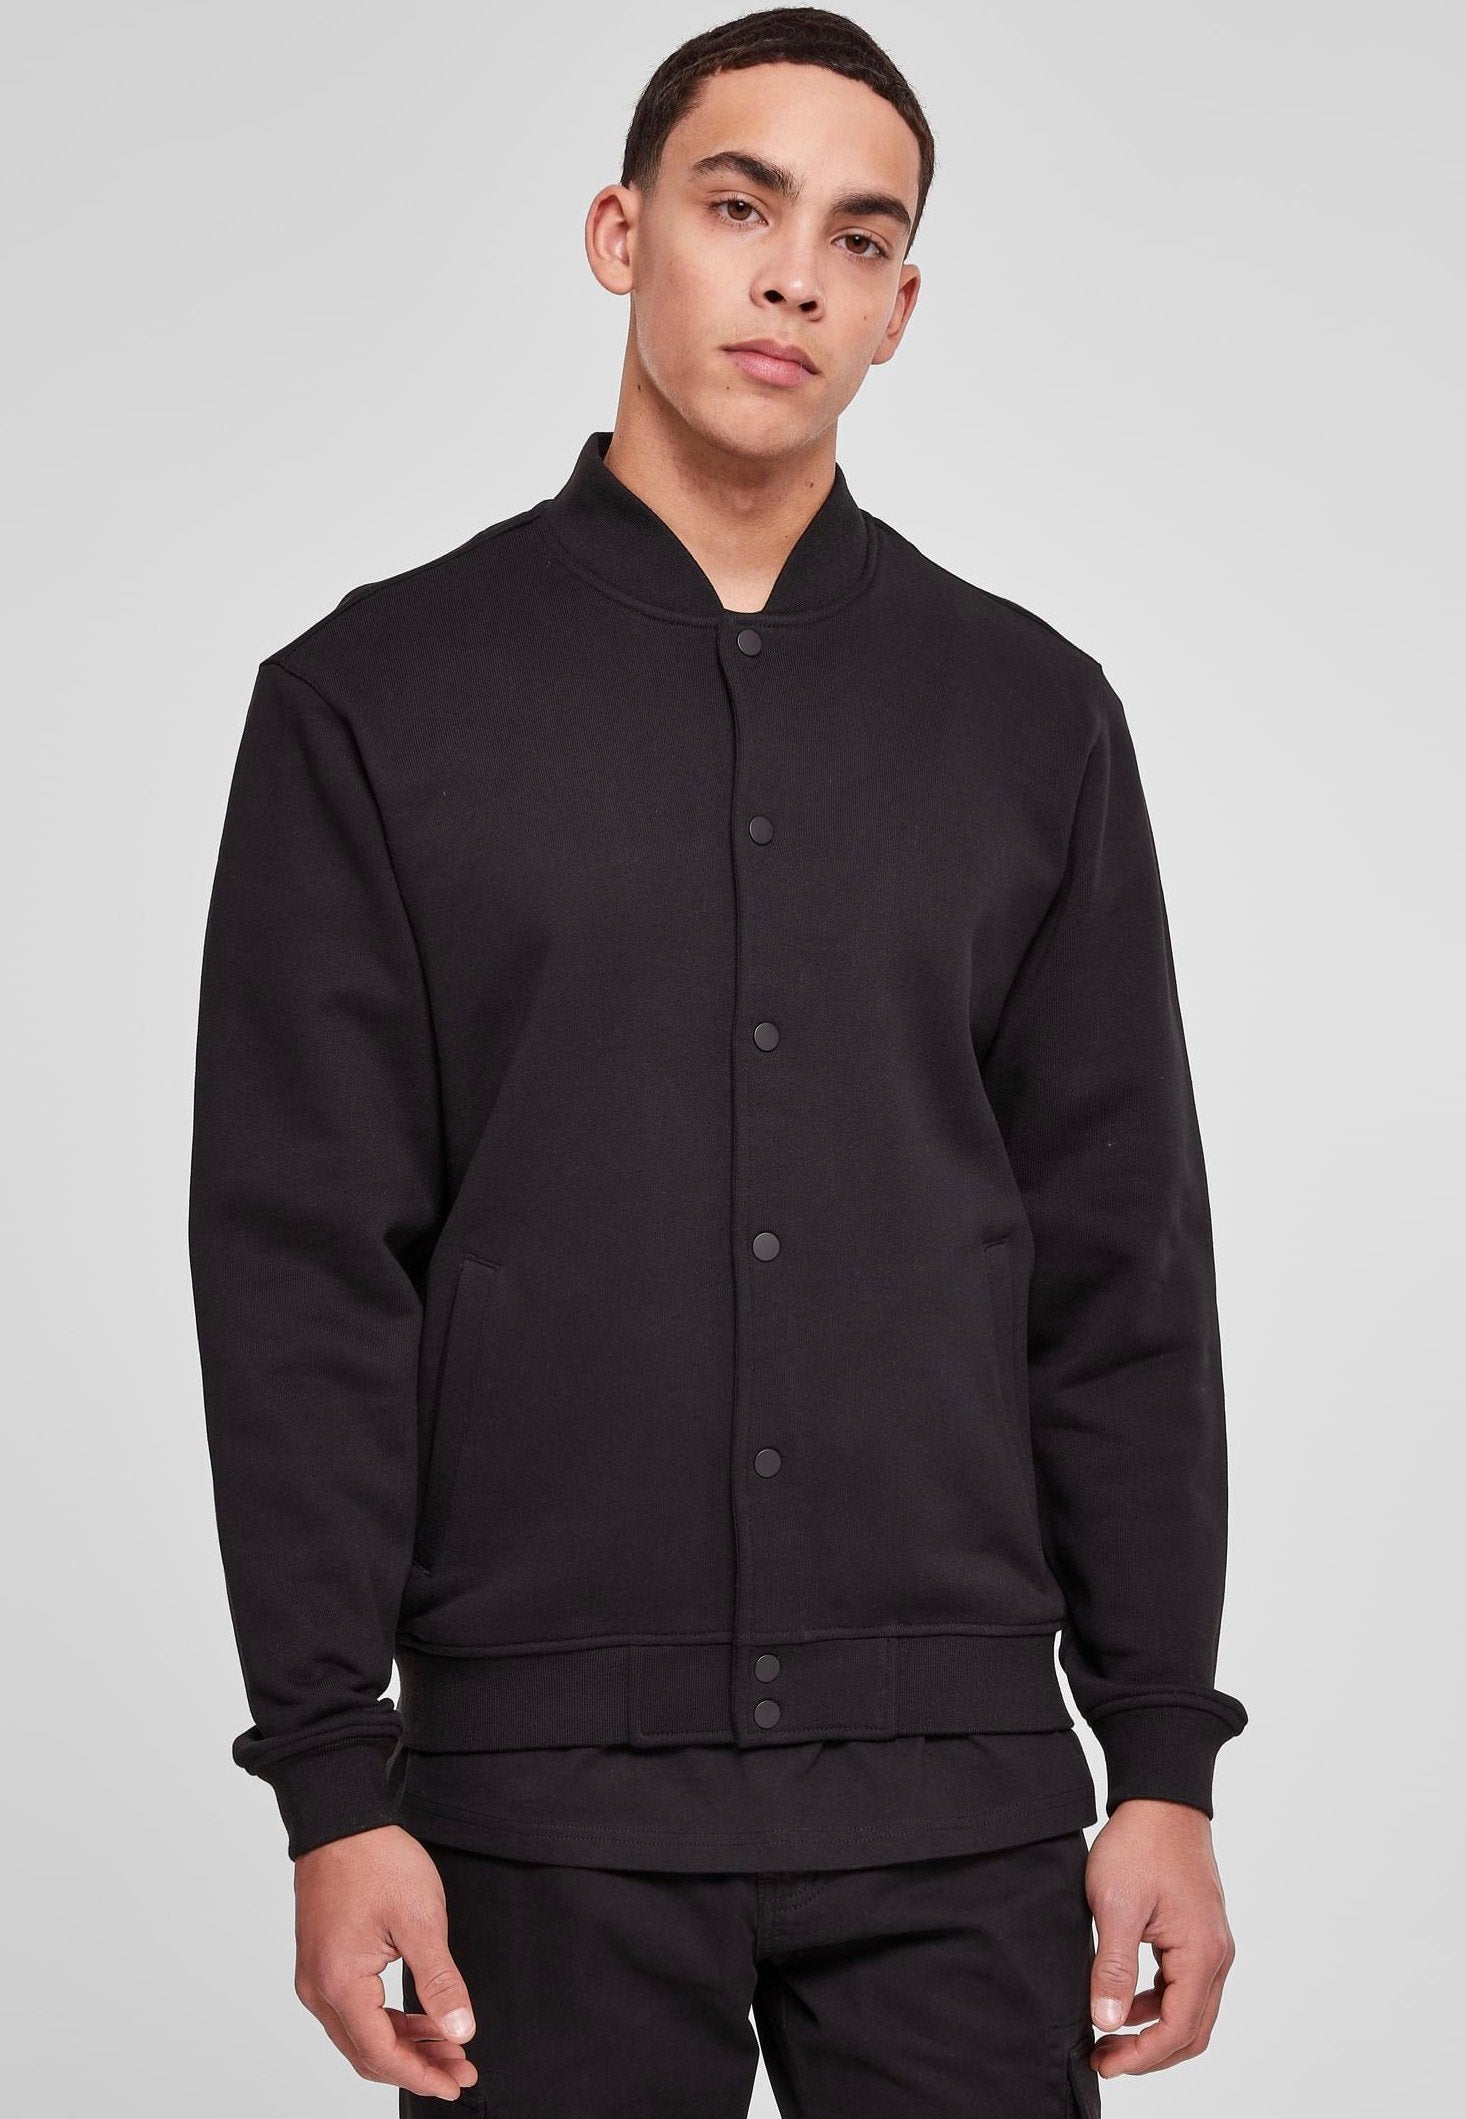 Urban Classics - Ultra Heavy Solid Black - College Jacket